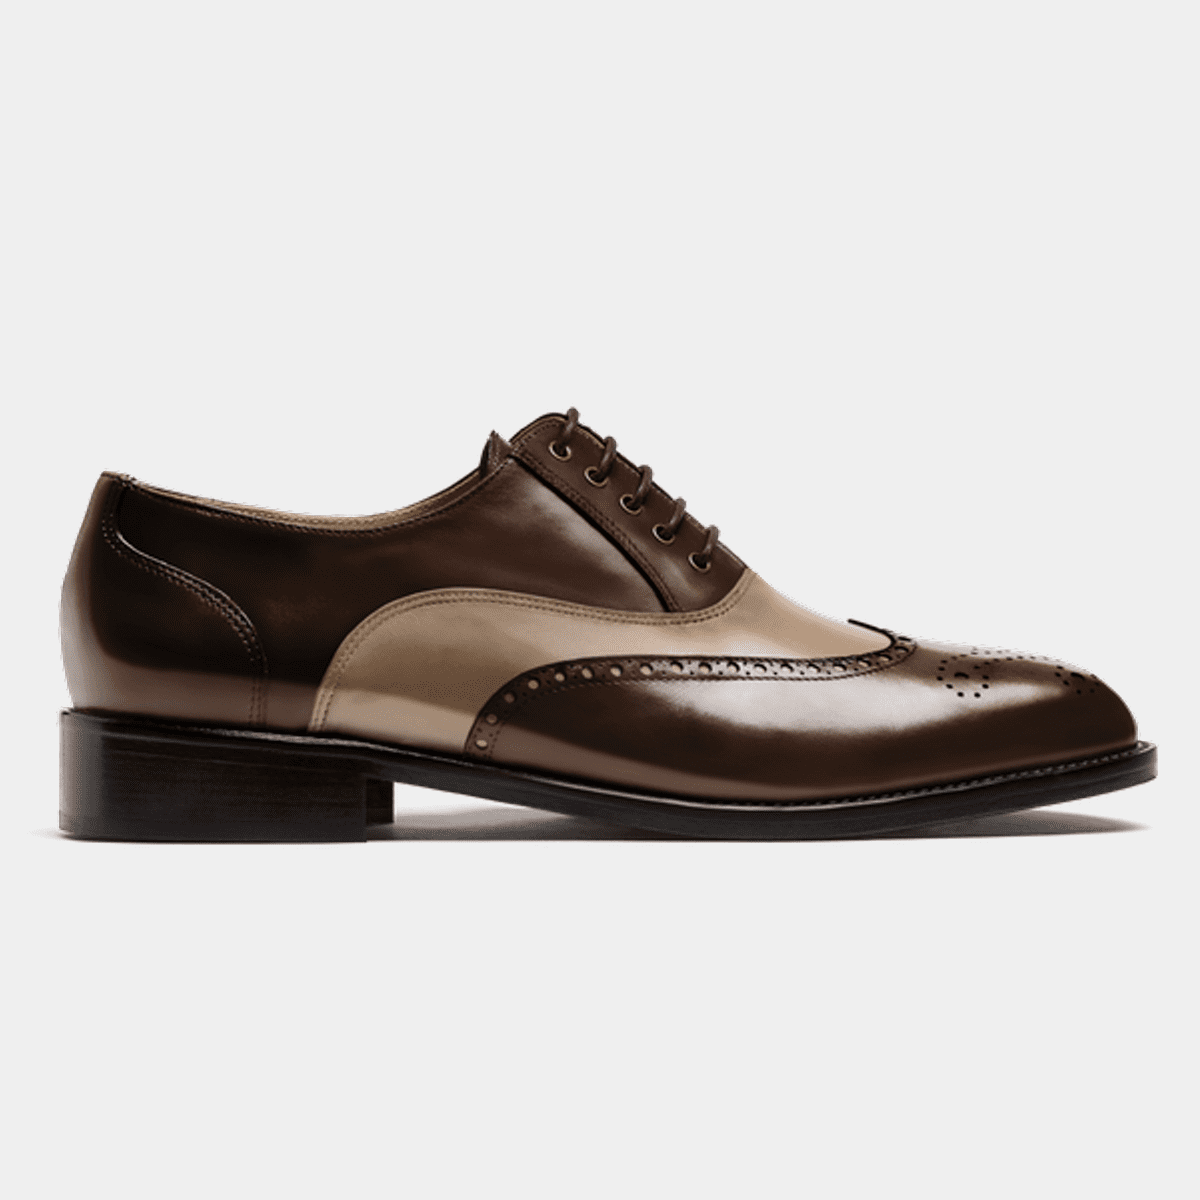 Quarter Brogue shoes - brown & beige flora leather 183€ | Hockerty